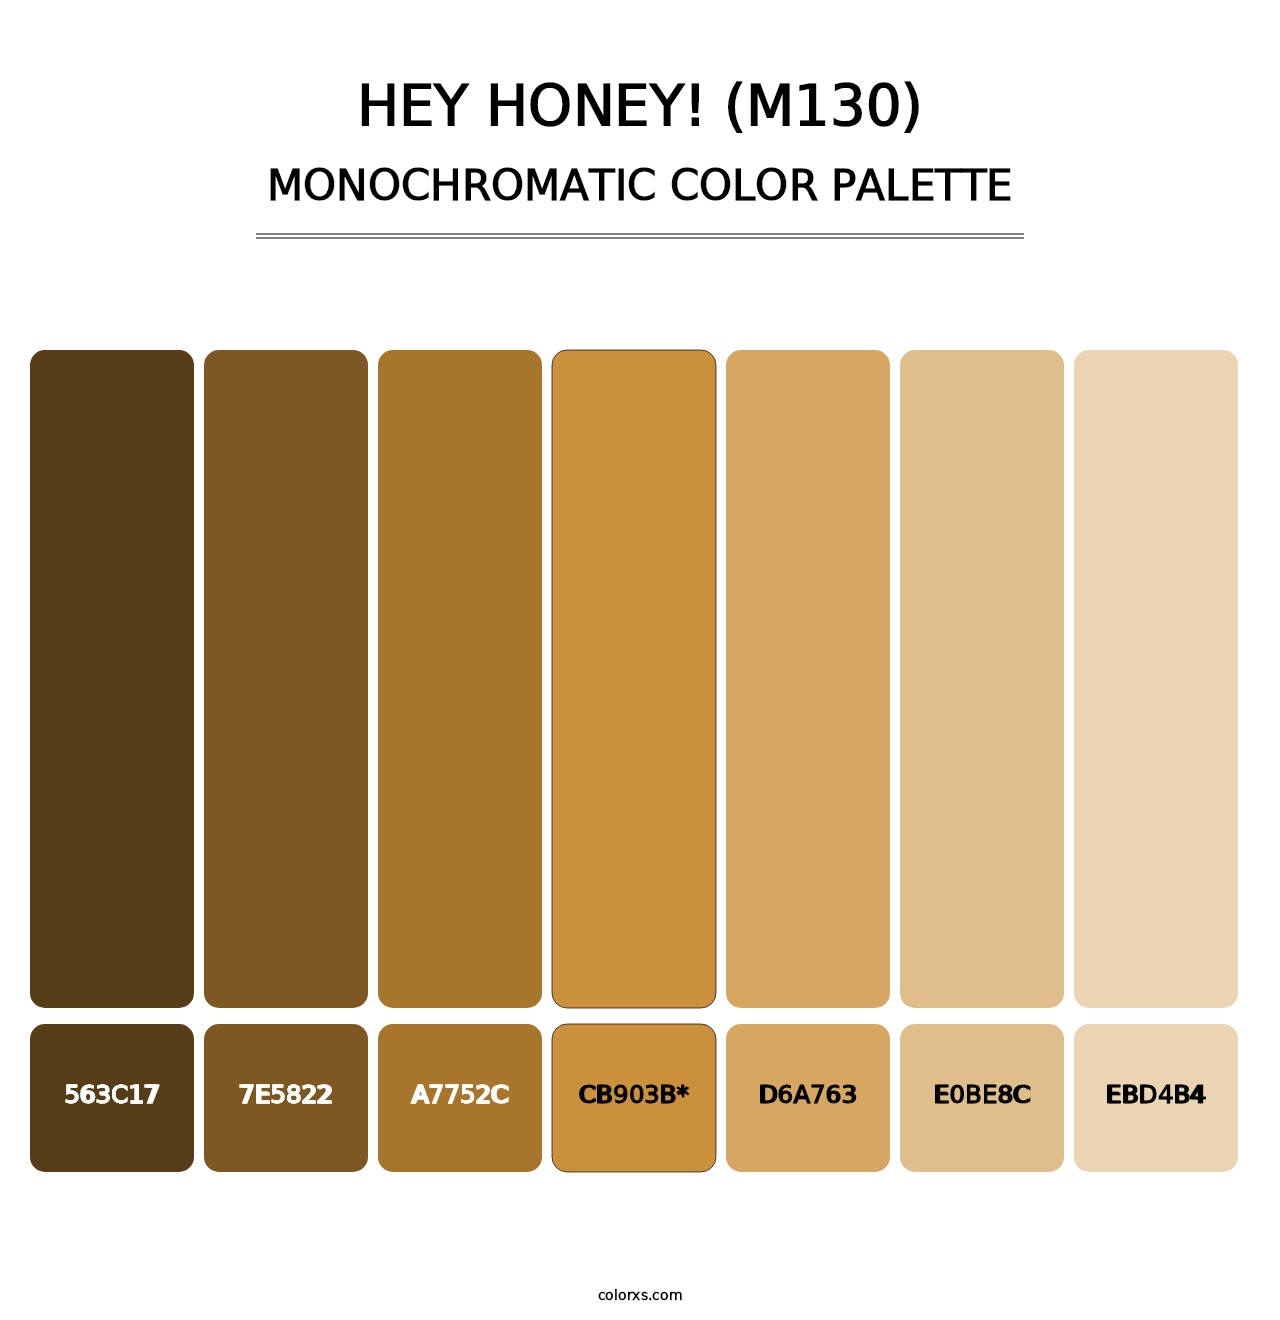 Hey Honey! (M130) - Monochromatic Color Palette